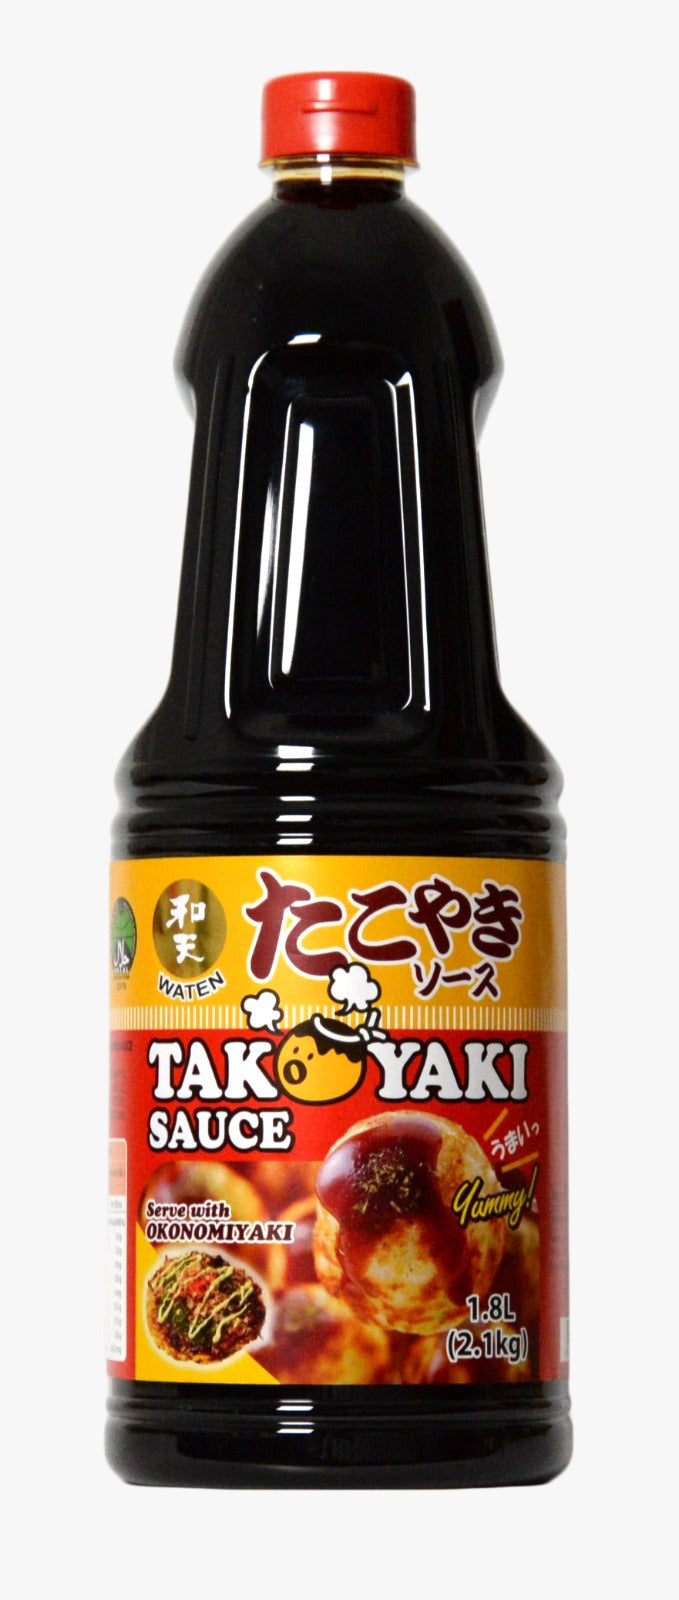 "Waten" Takoyaki Sauce 2.1kg (Halal-Certified)